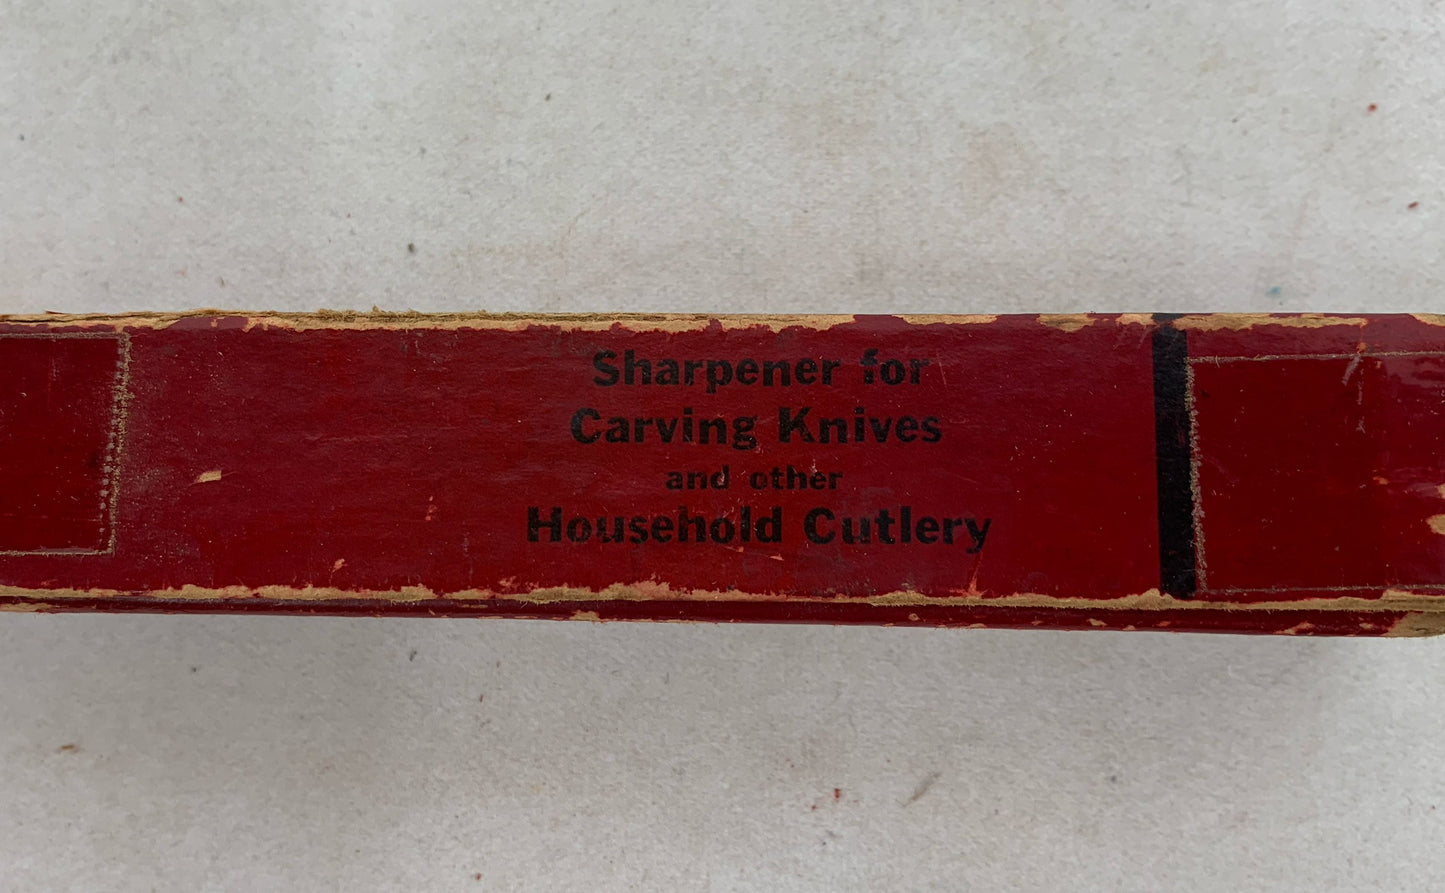 Norton Company Abrasives Knife Sharpener 11.25" In Original Box